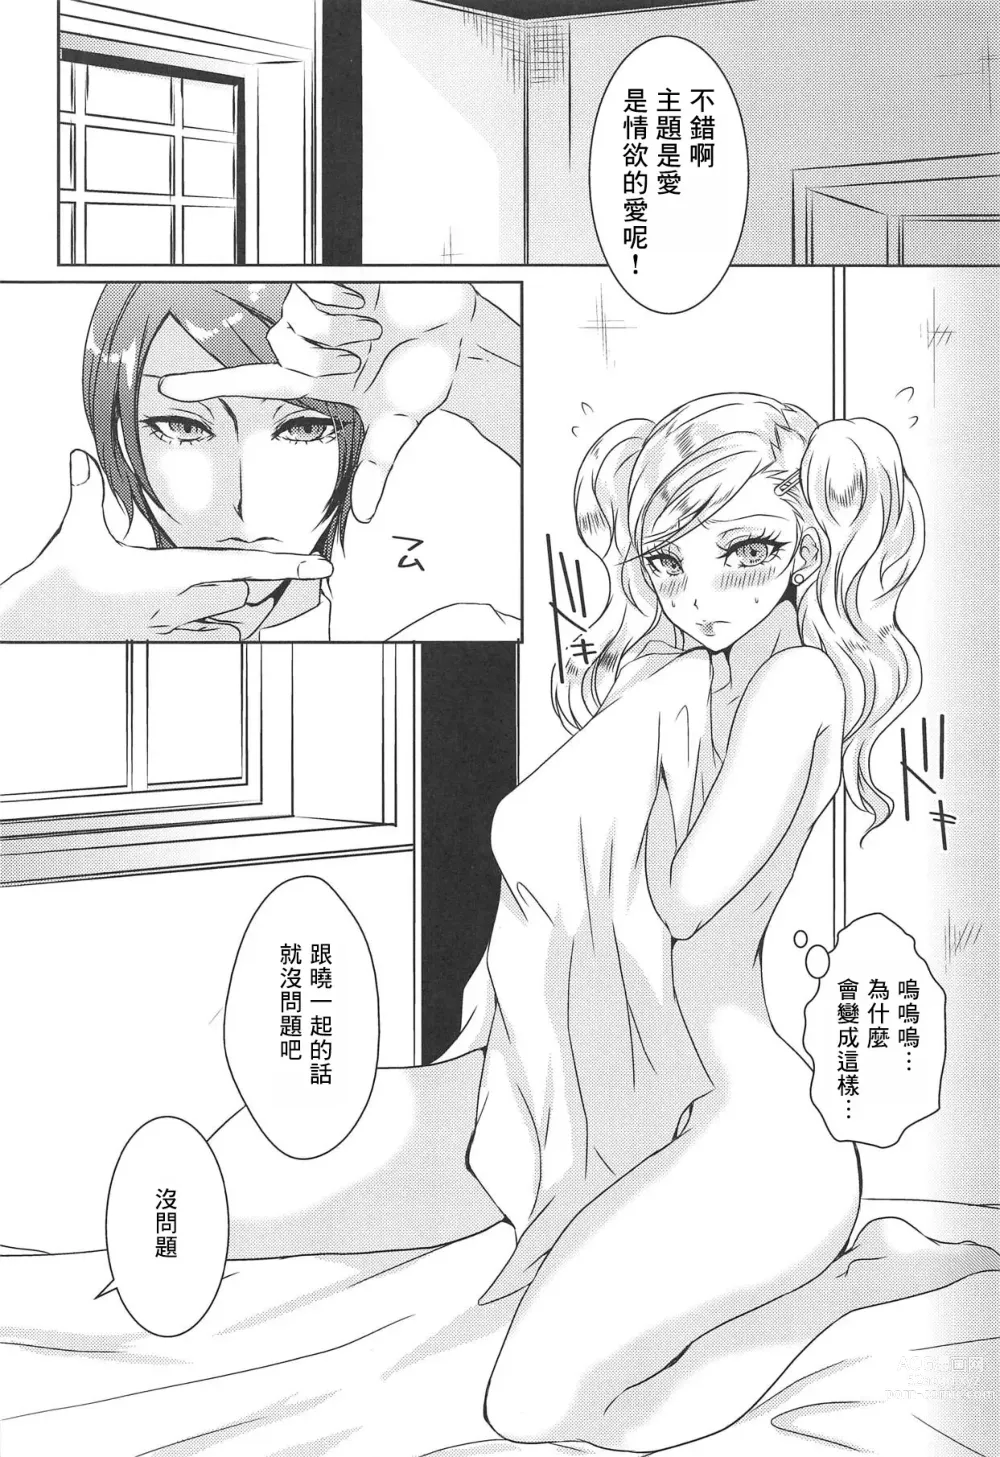 Page 5 of doujinshi OMG!!